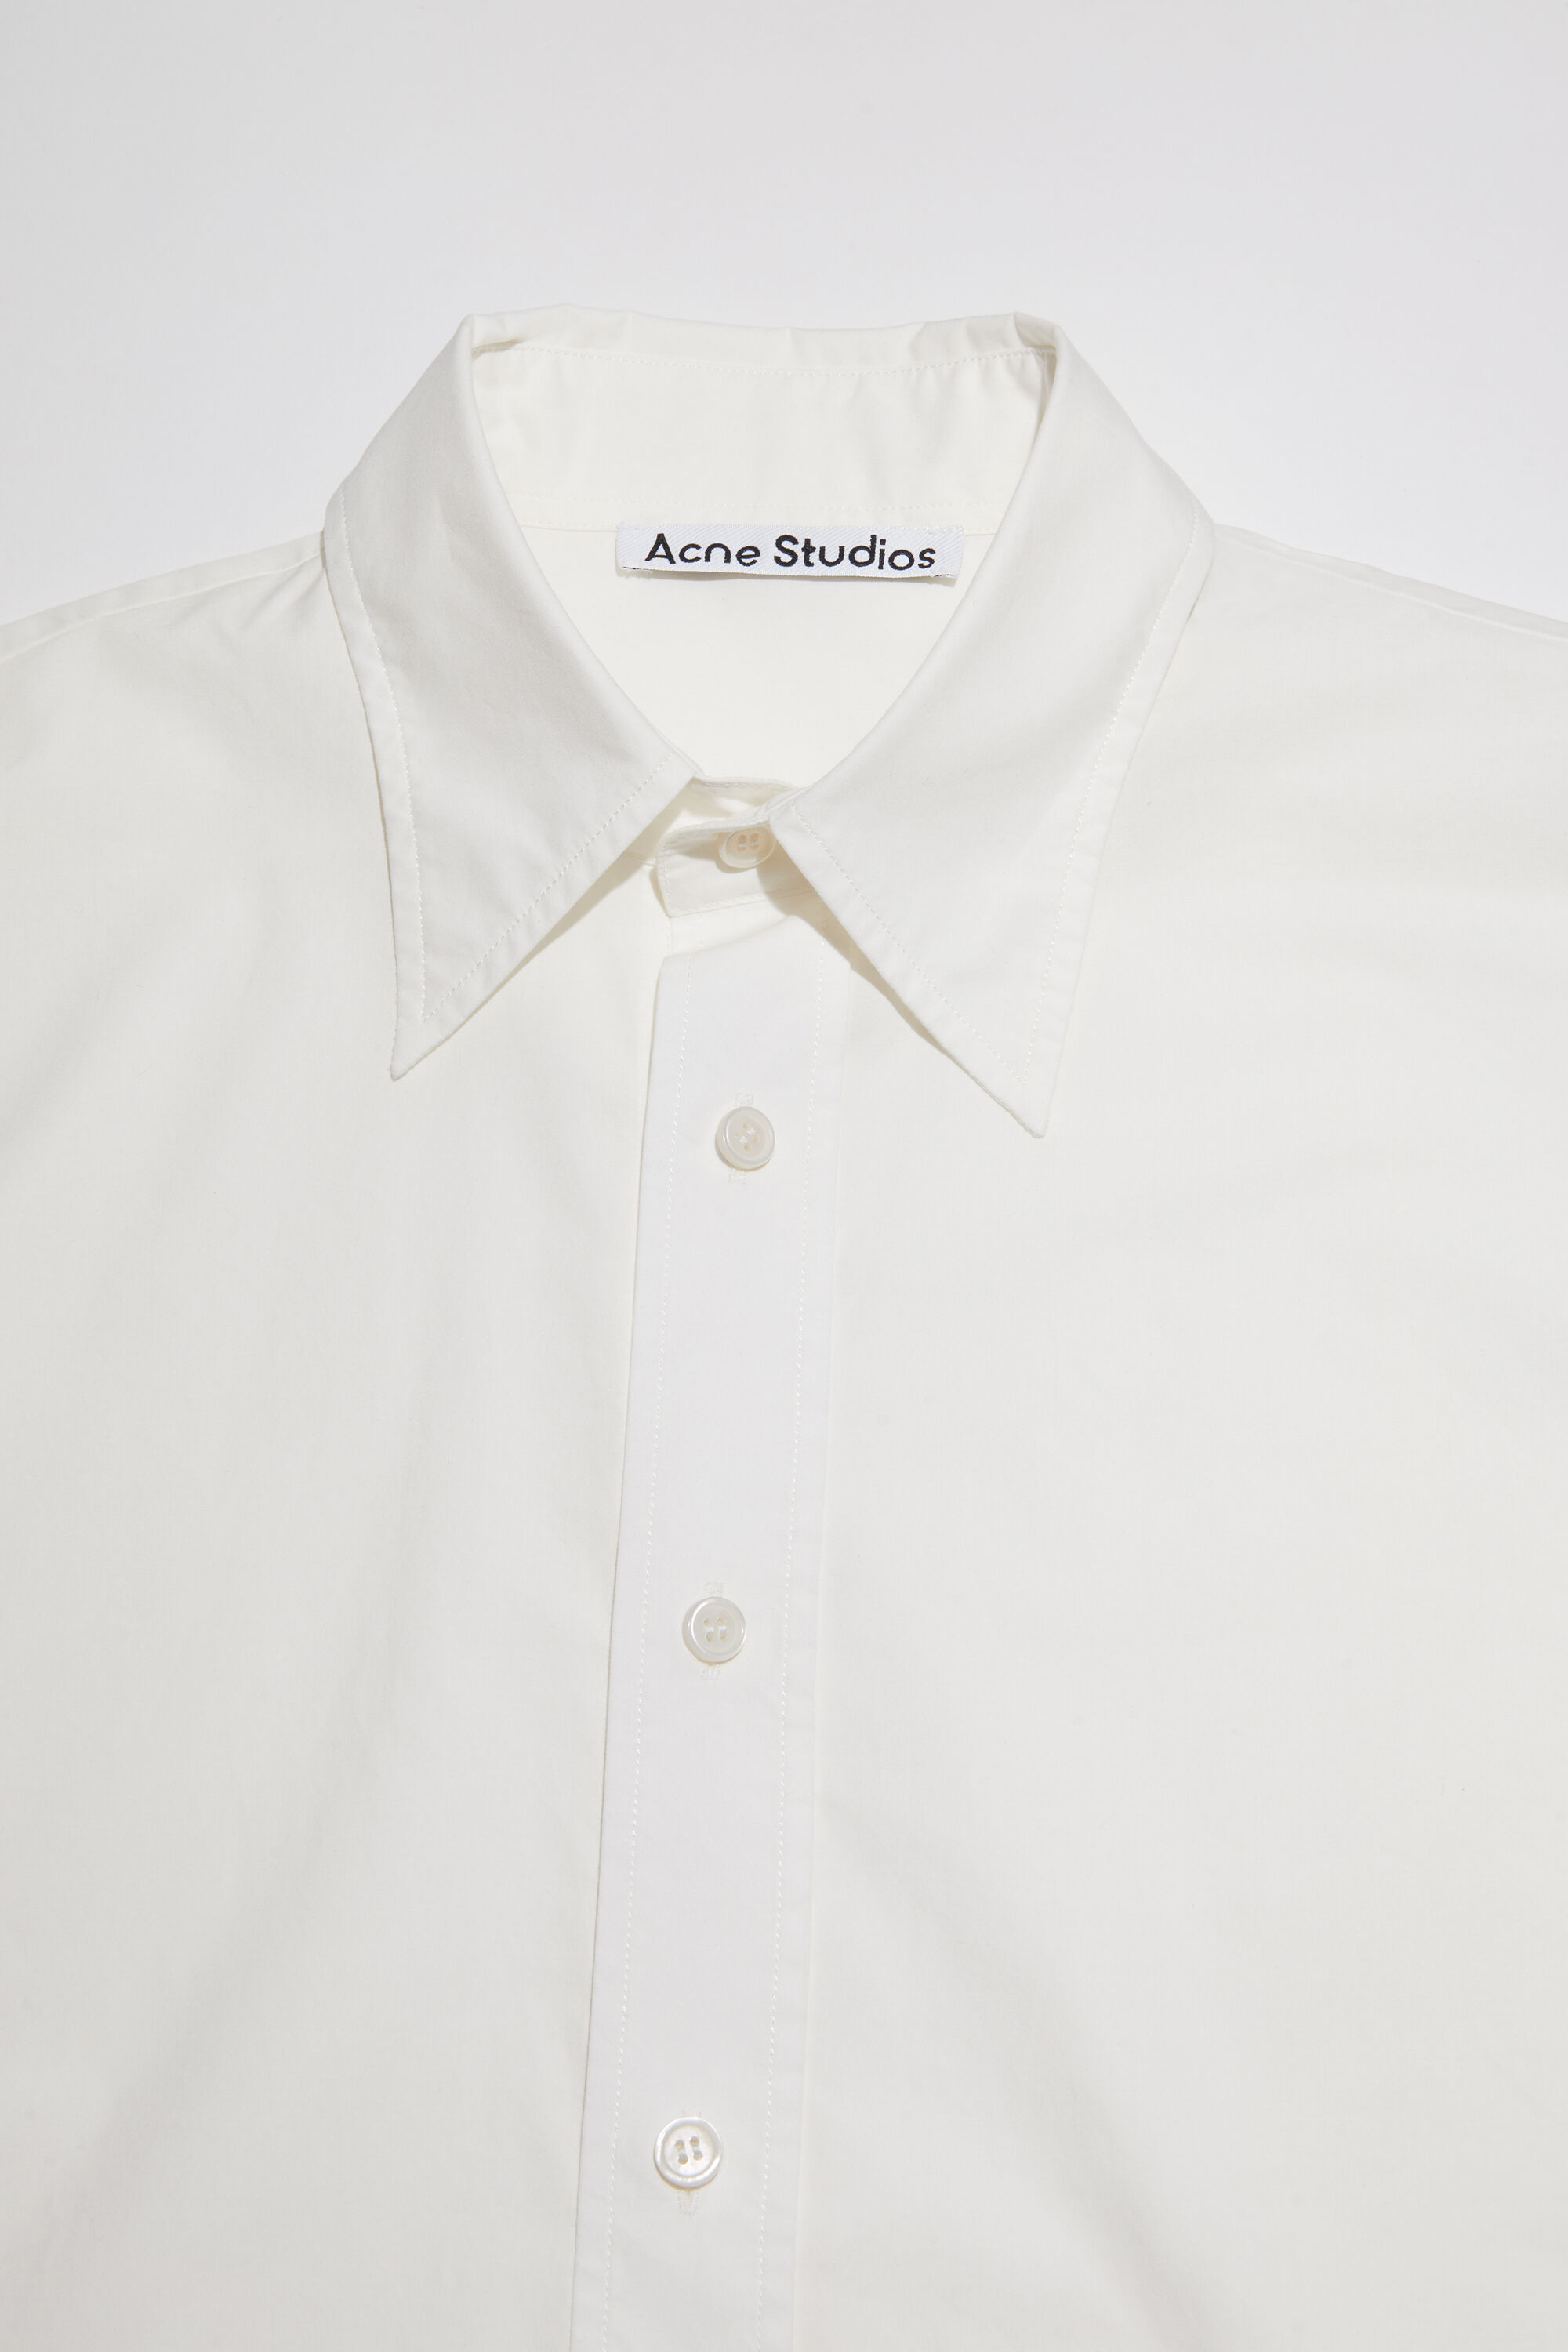 Acne Studios - フィットボタンアップシャツ - ホワイト